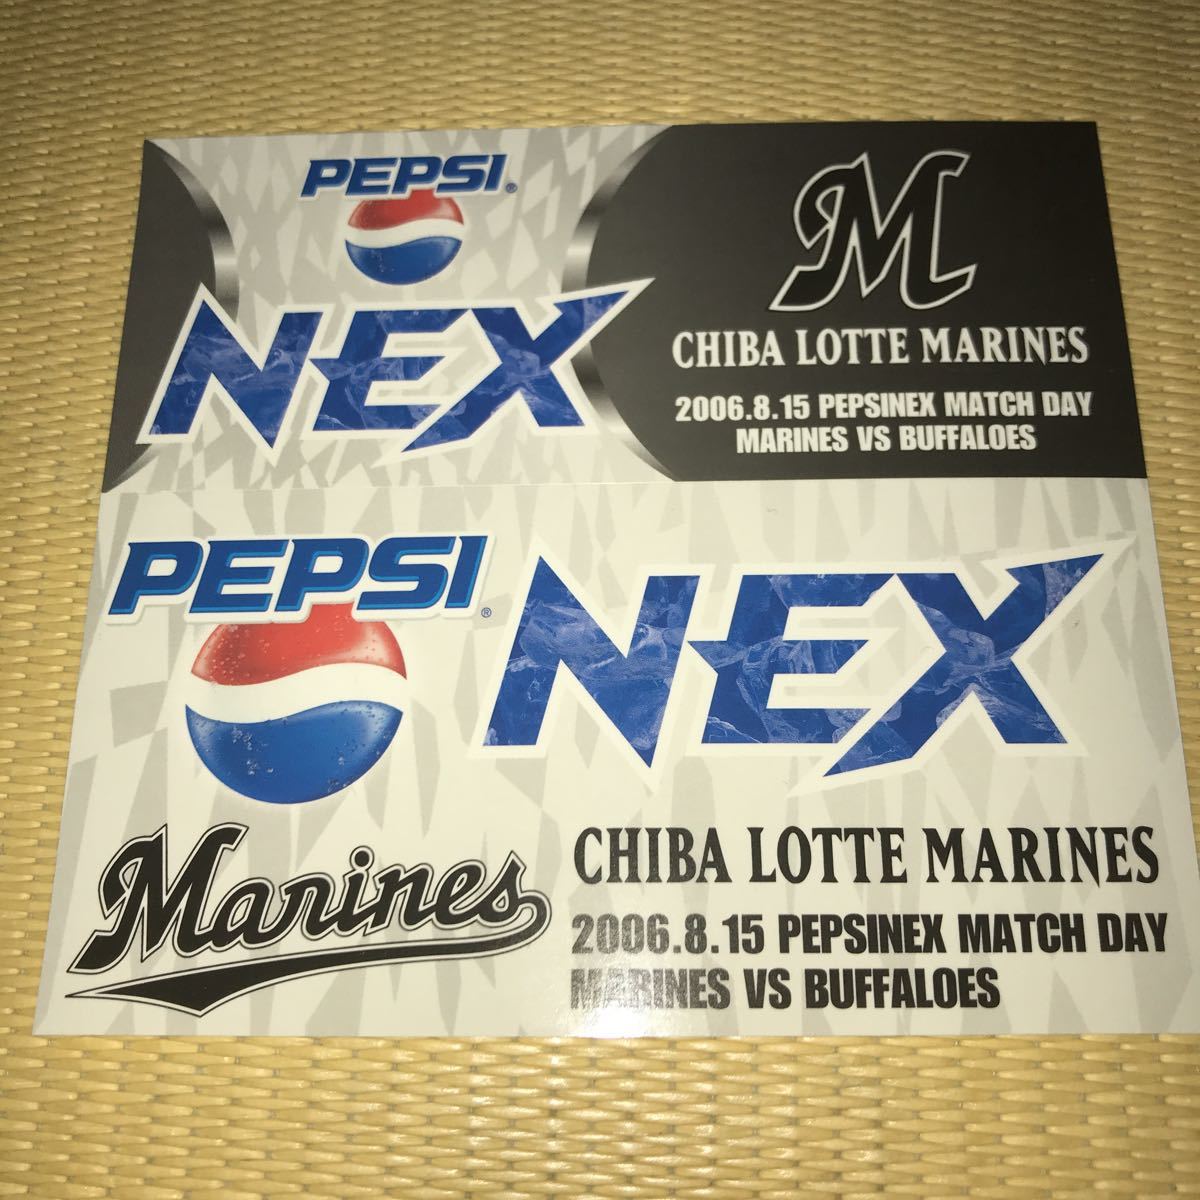  Pepsi NEX Chiba Lotte Marines стикер & незначительный полотенце 